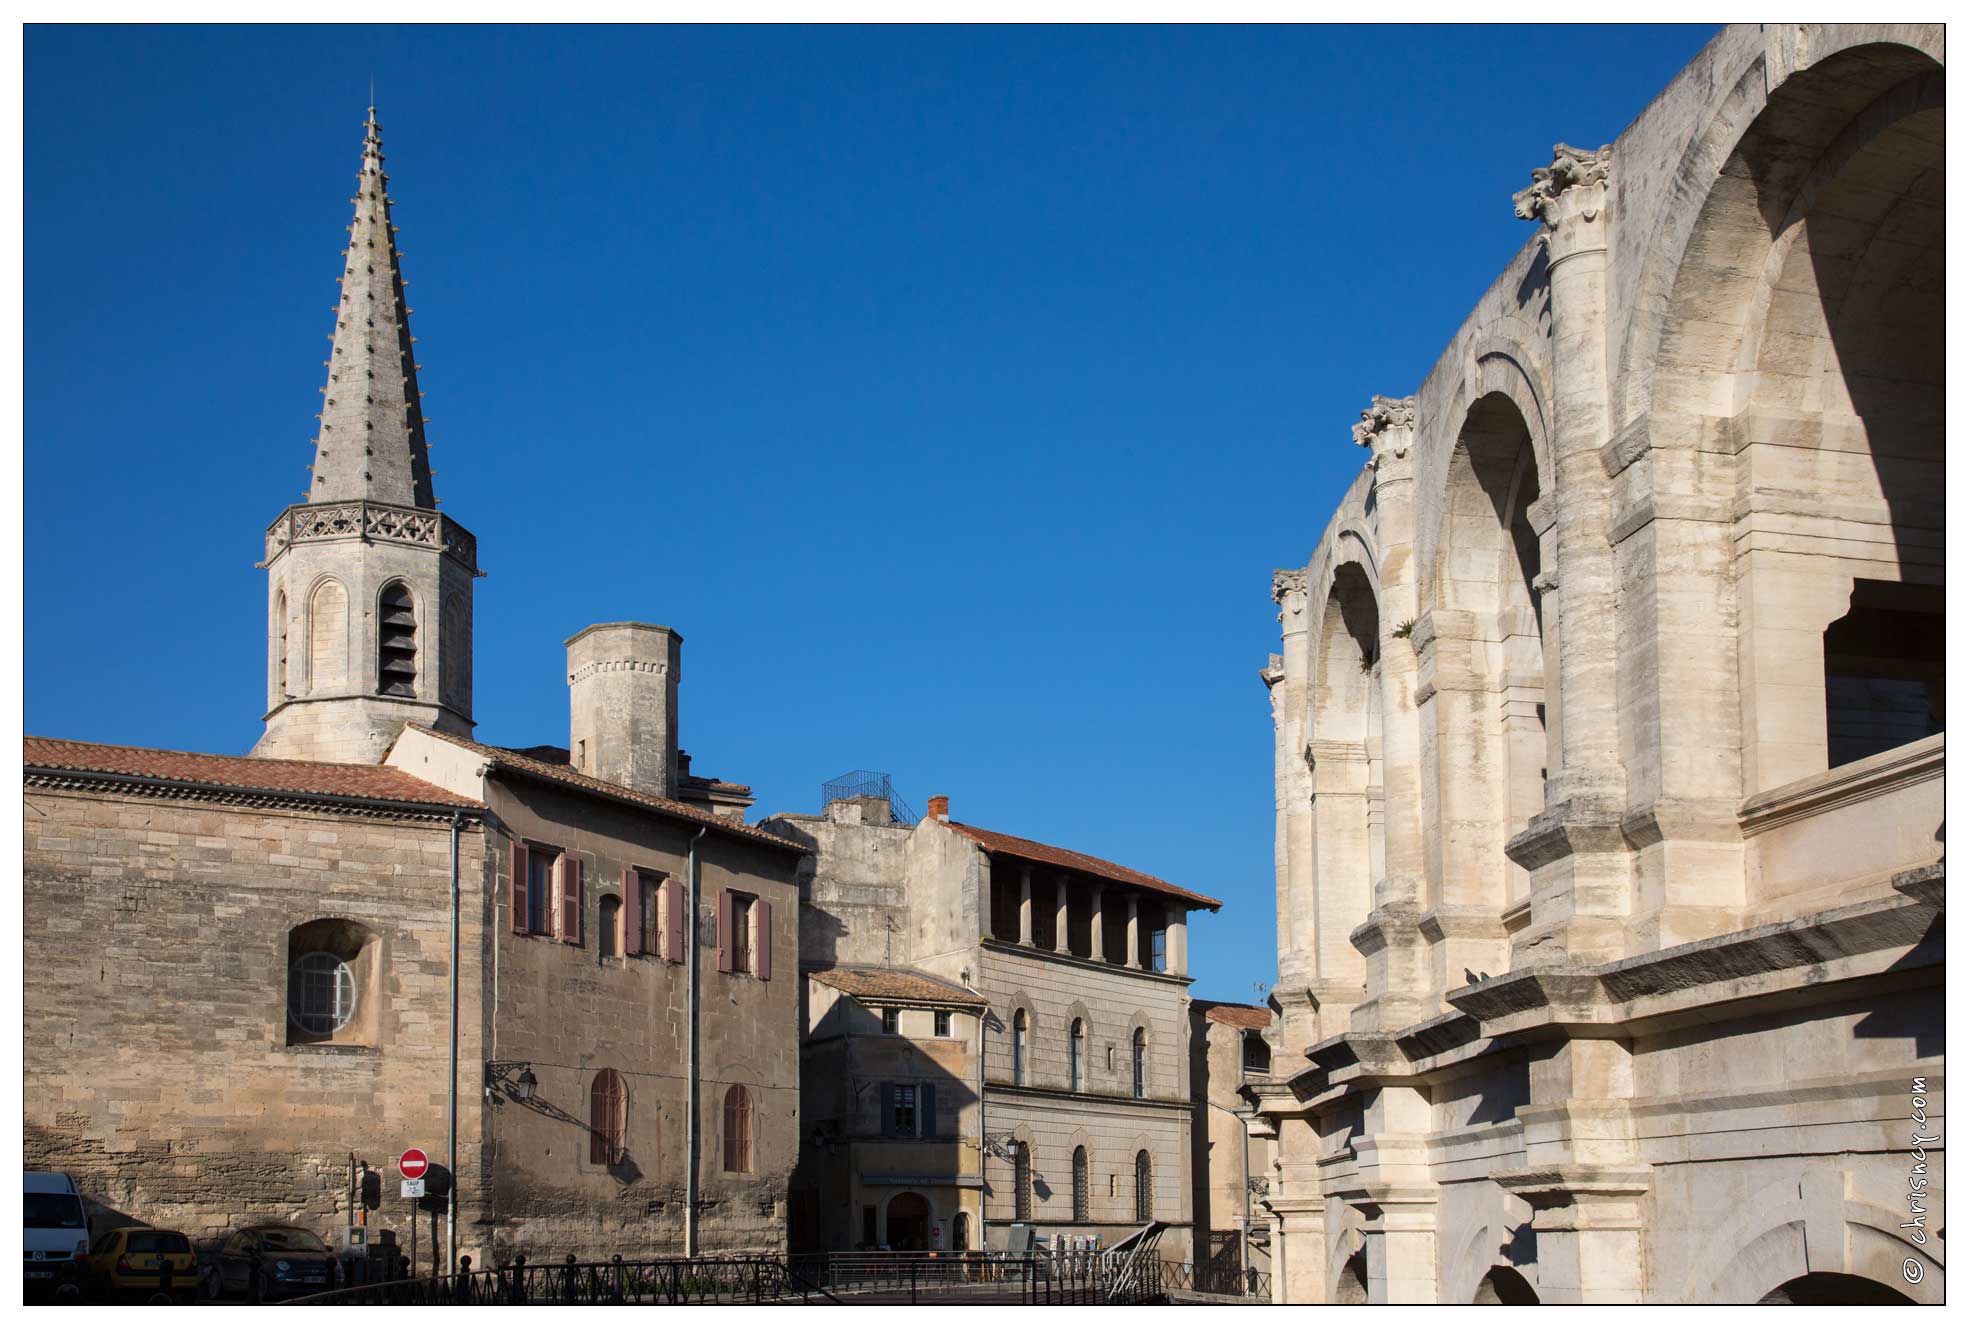 20160121-10_6457-Arles_Clocher_des_Franciscains_arenes.jpg